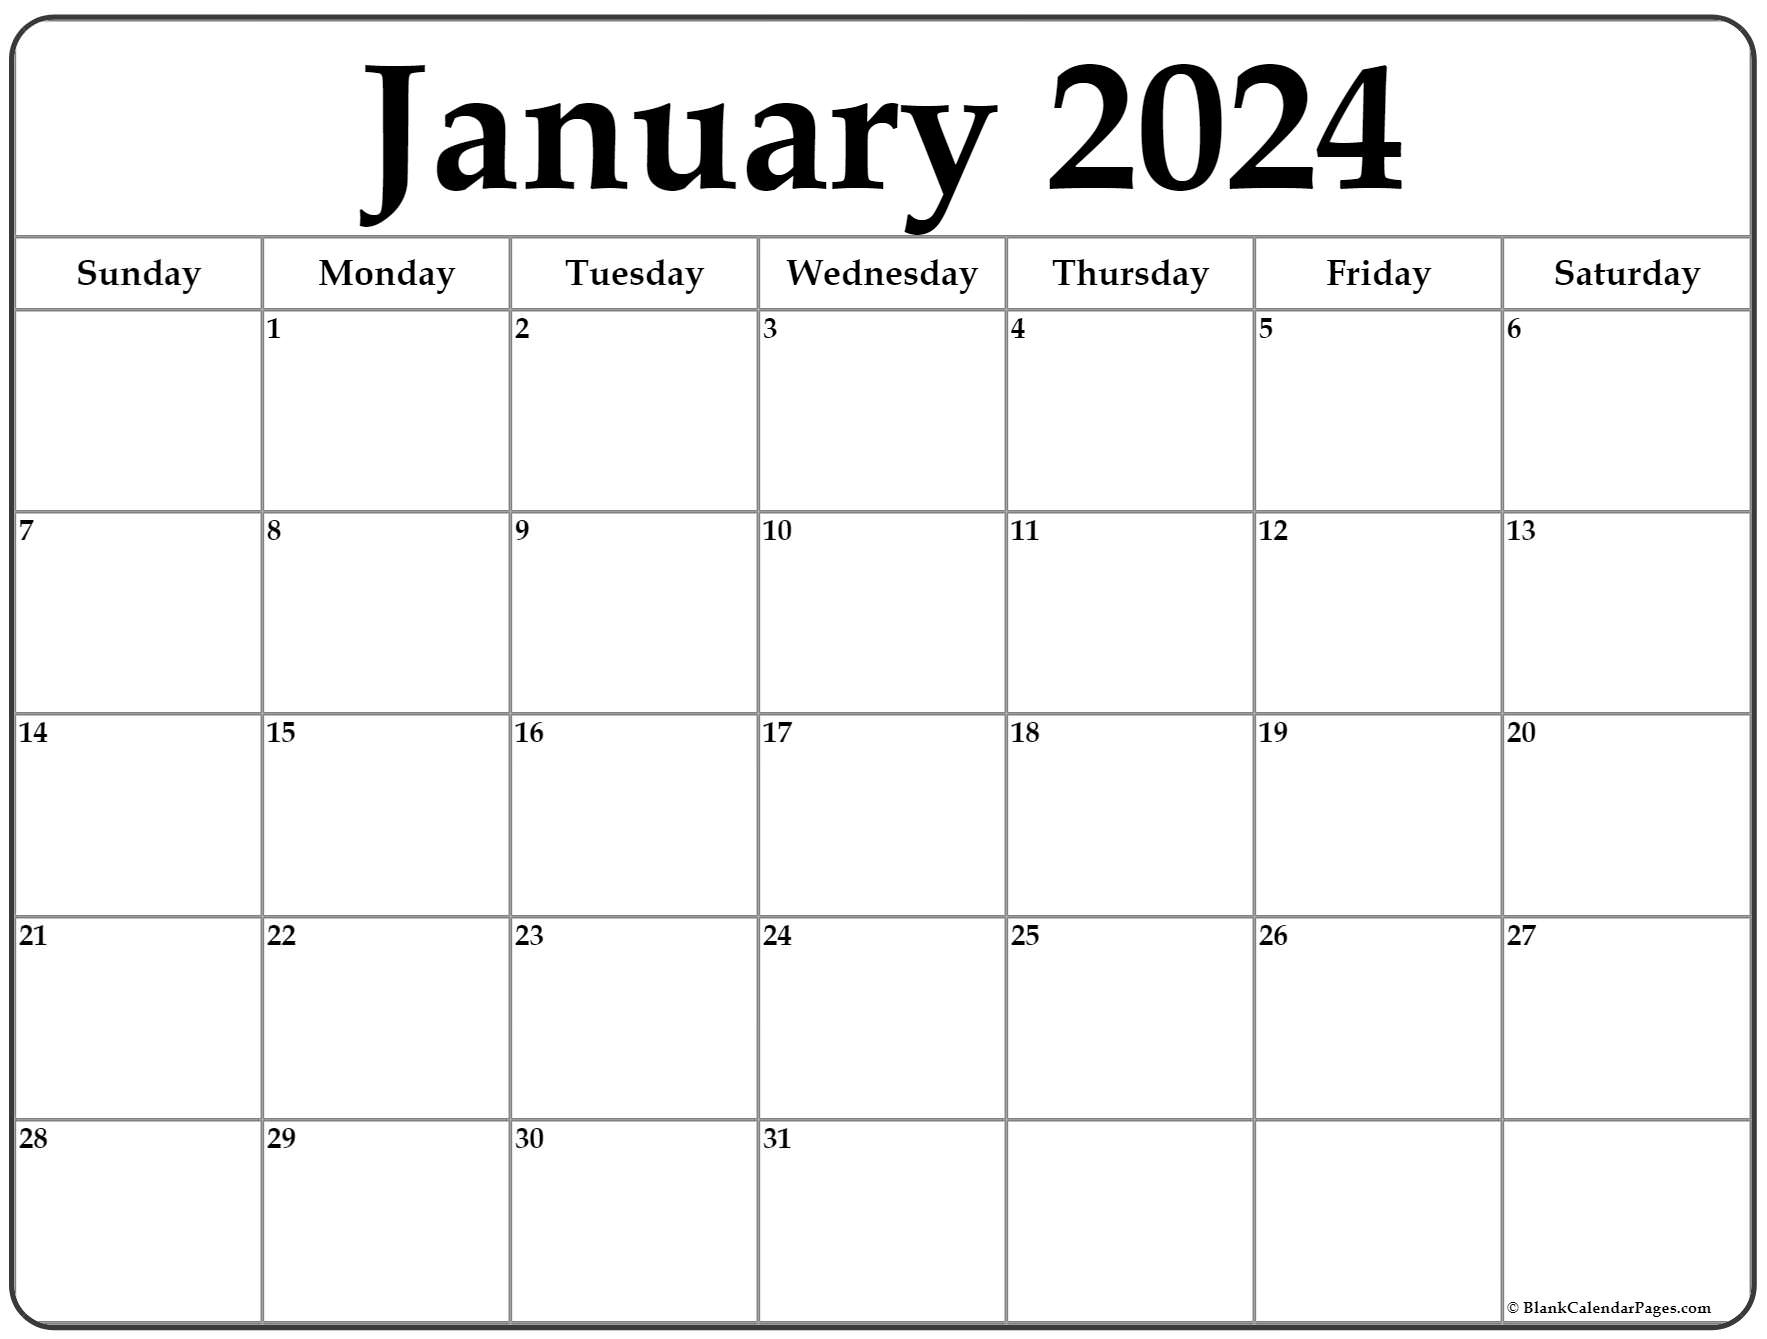 January 2024 Calendar | Free Printable Calendar | Free Printable 2024 Monthly Calendar